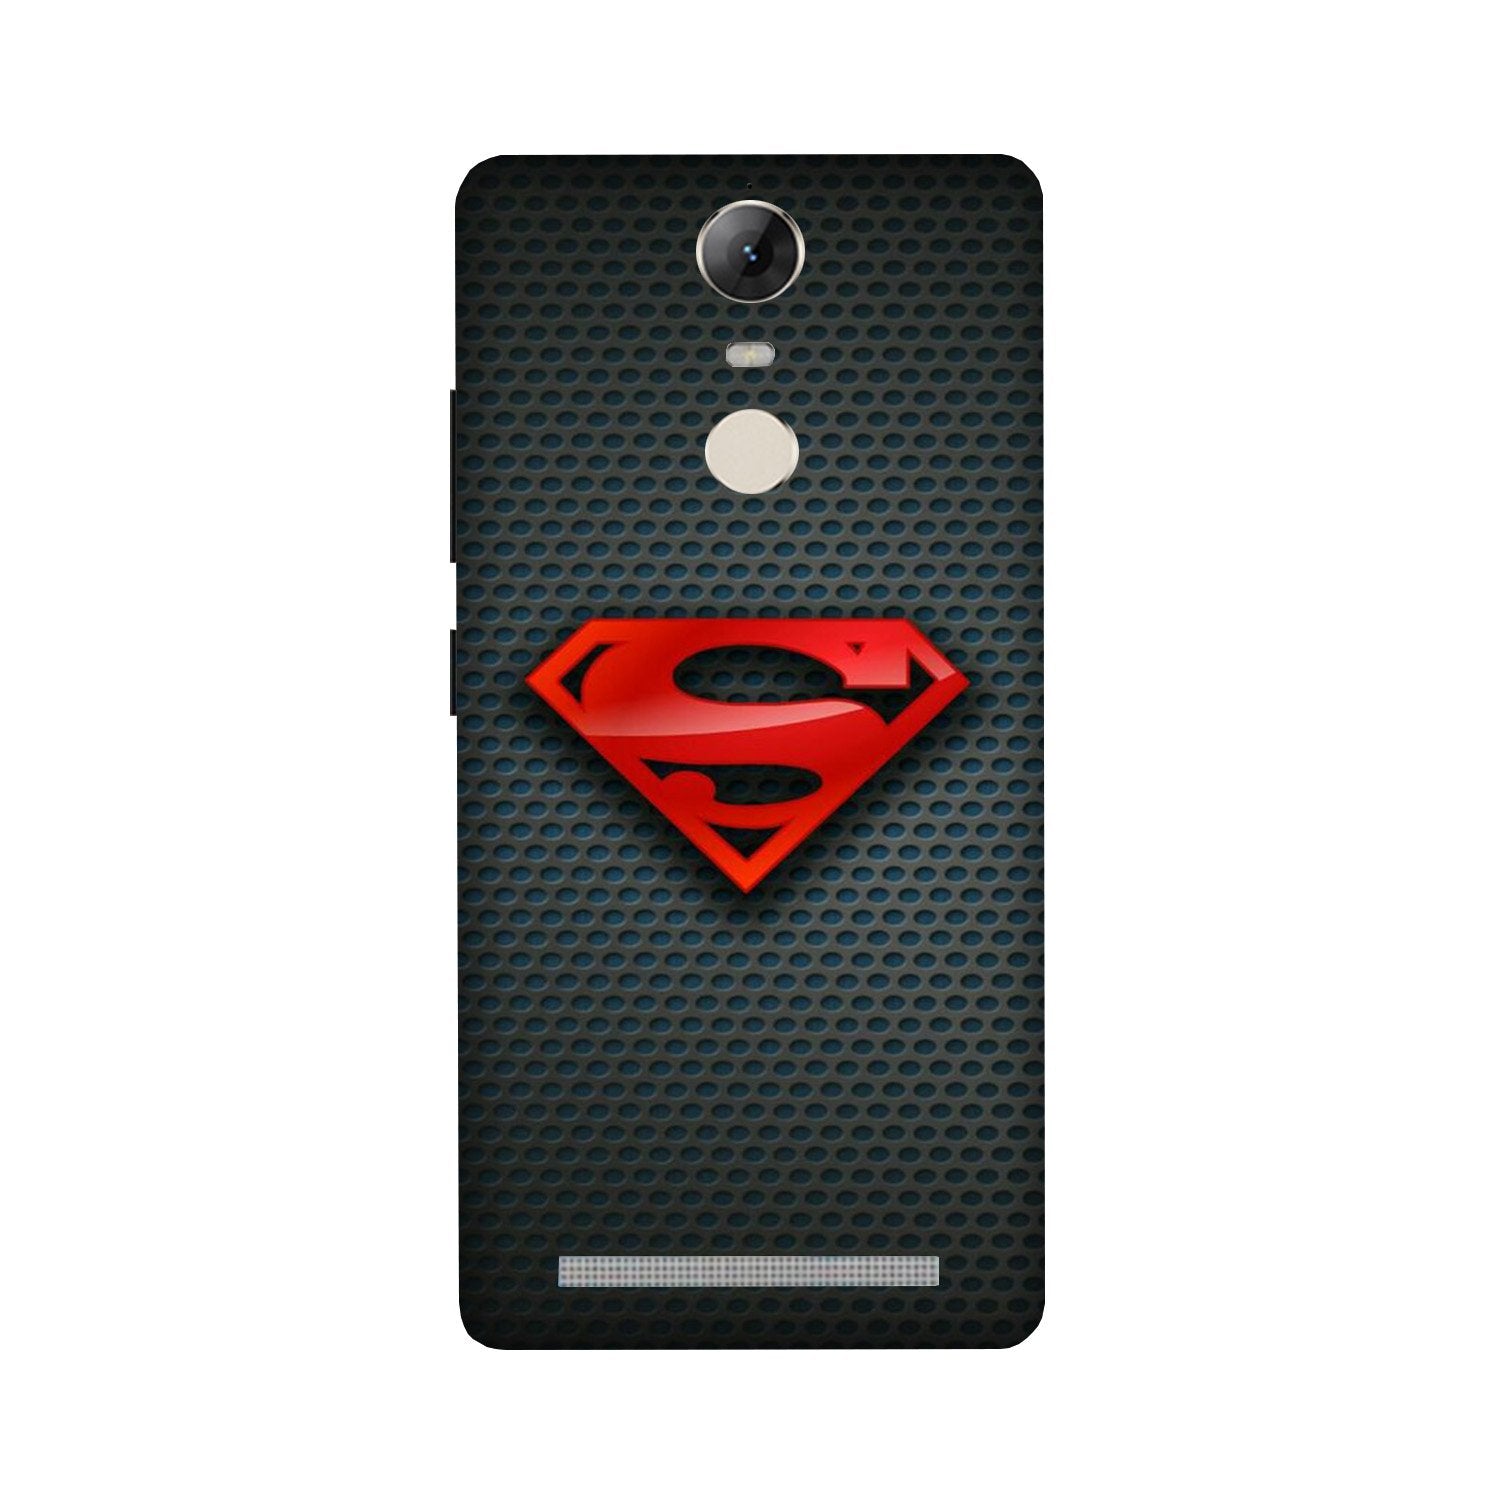 Superman Case for Lenovo Vibe K5 Note (Design No. 247)